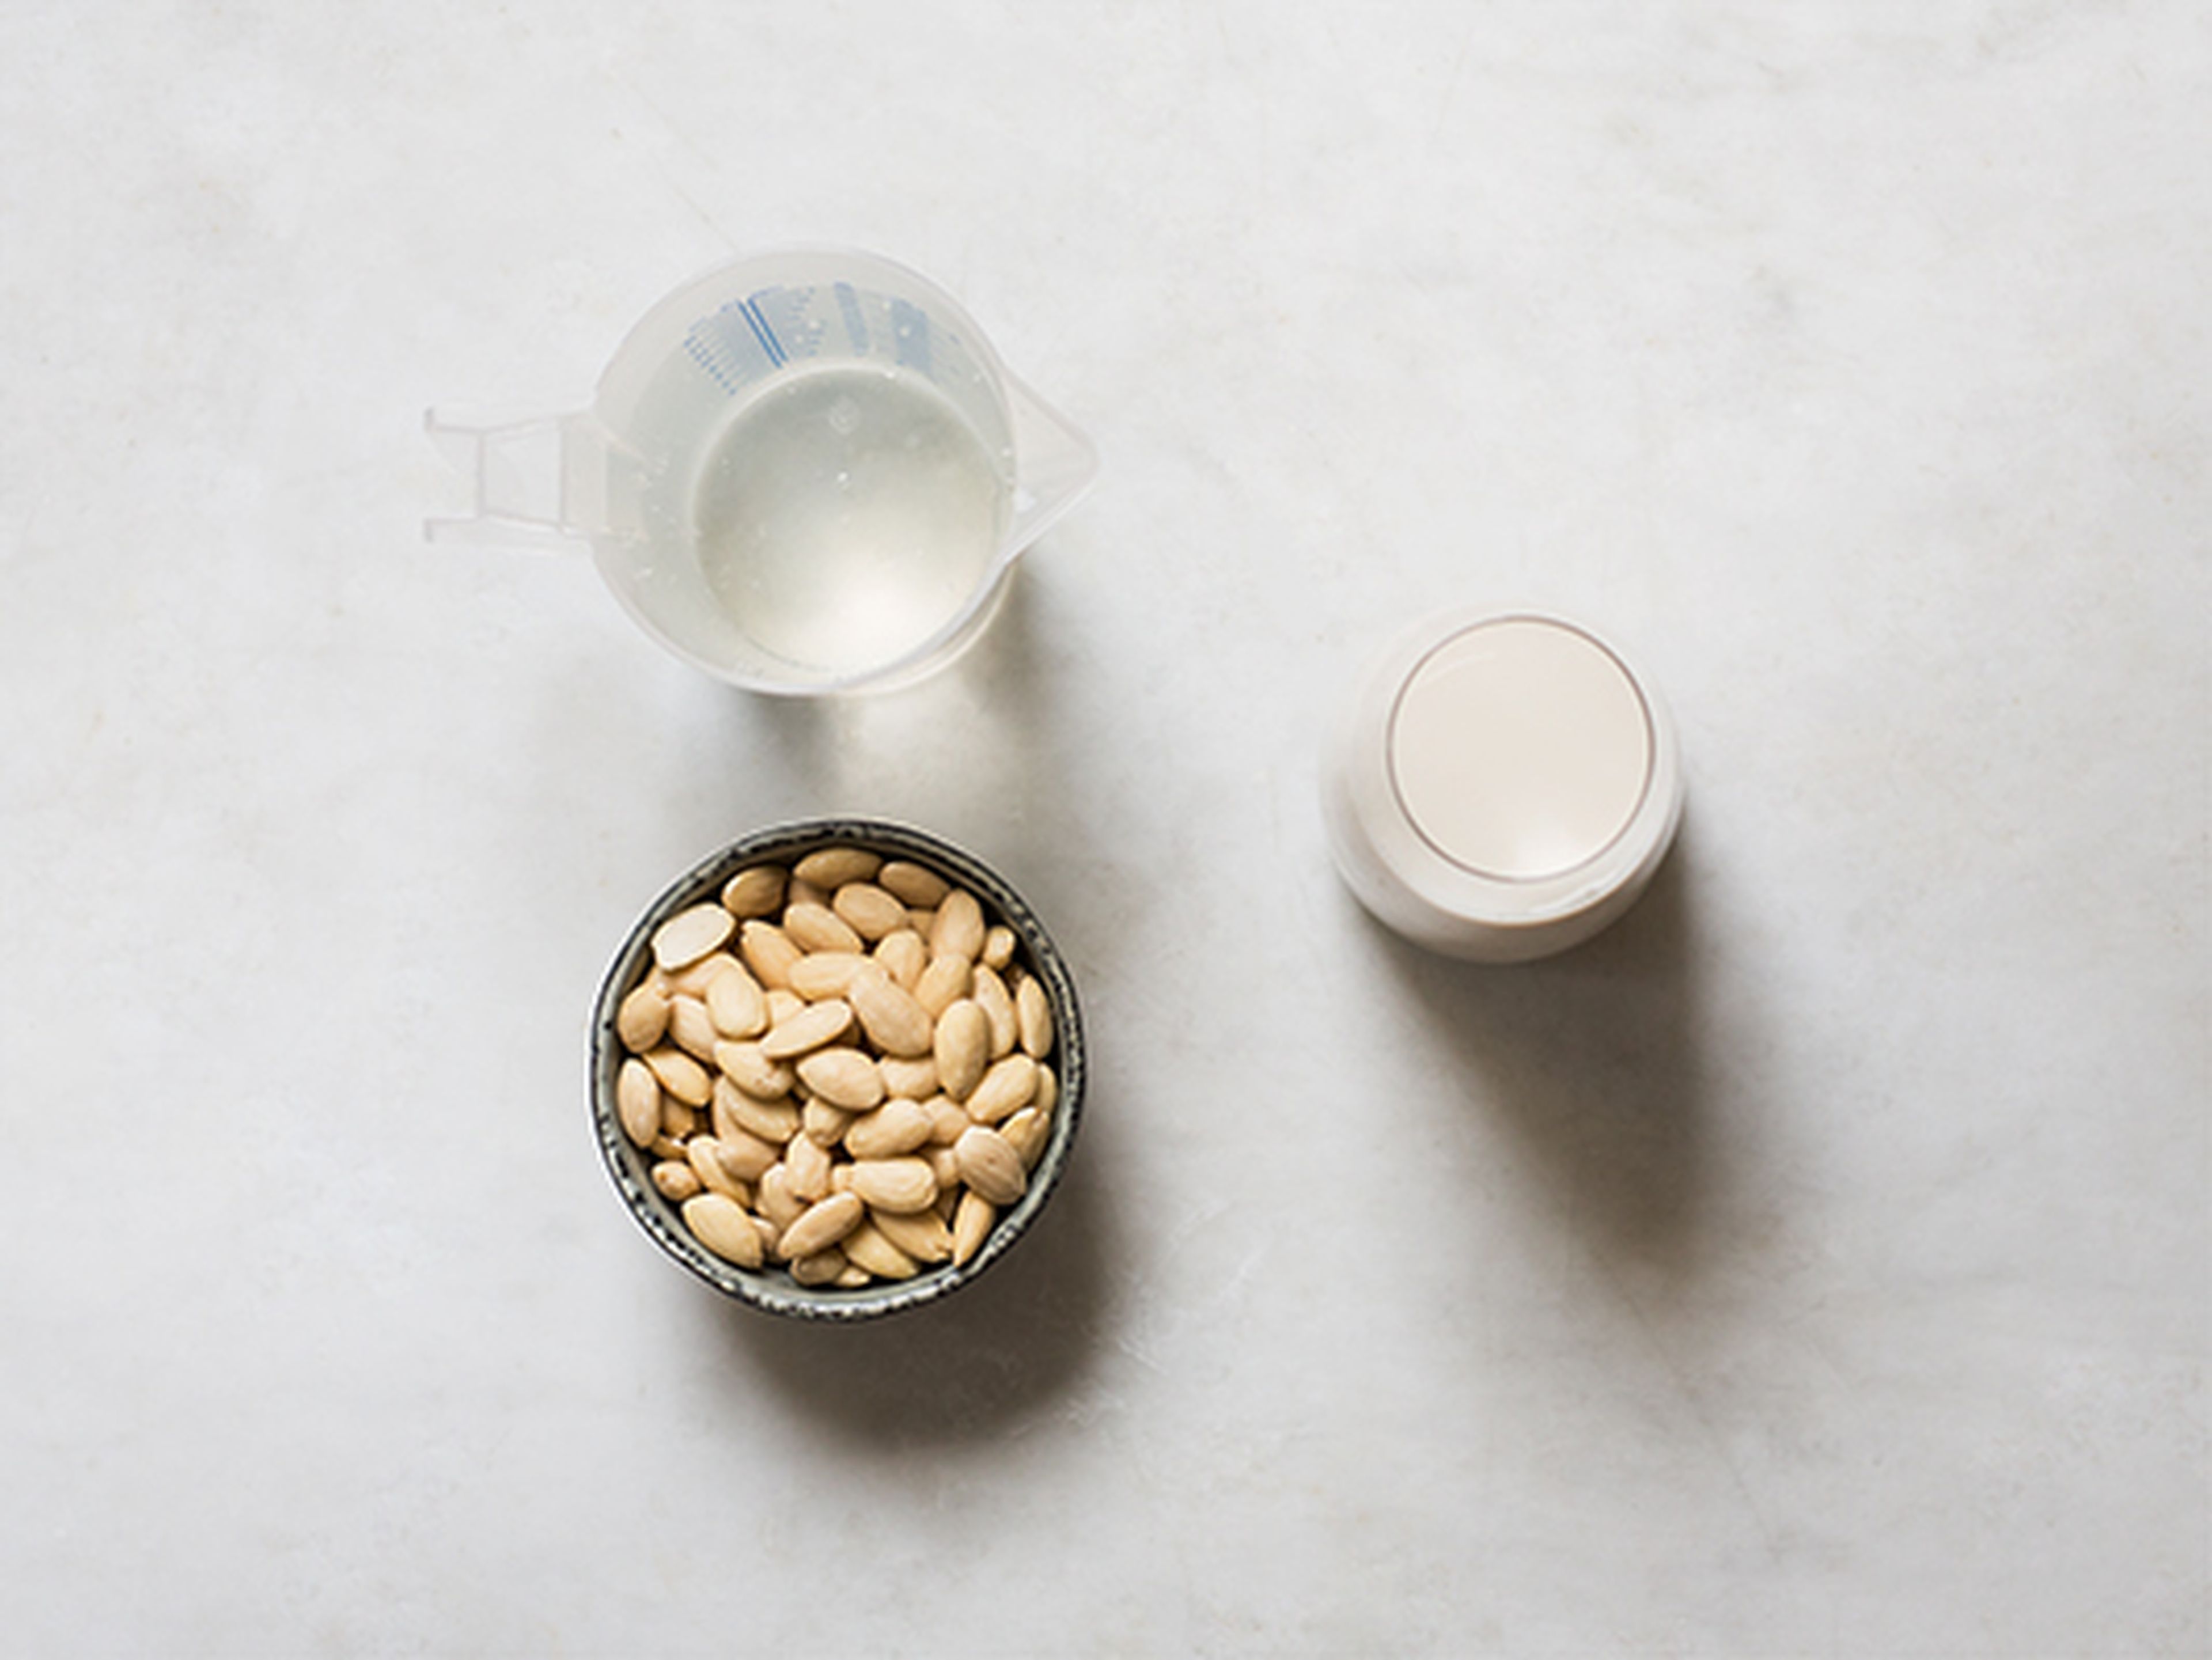 homemade-almond-milk